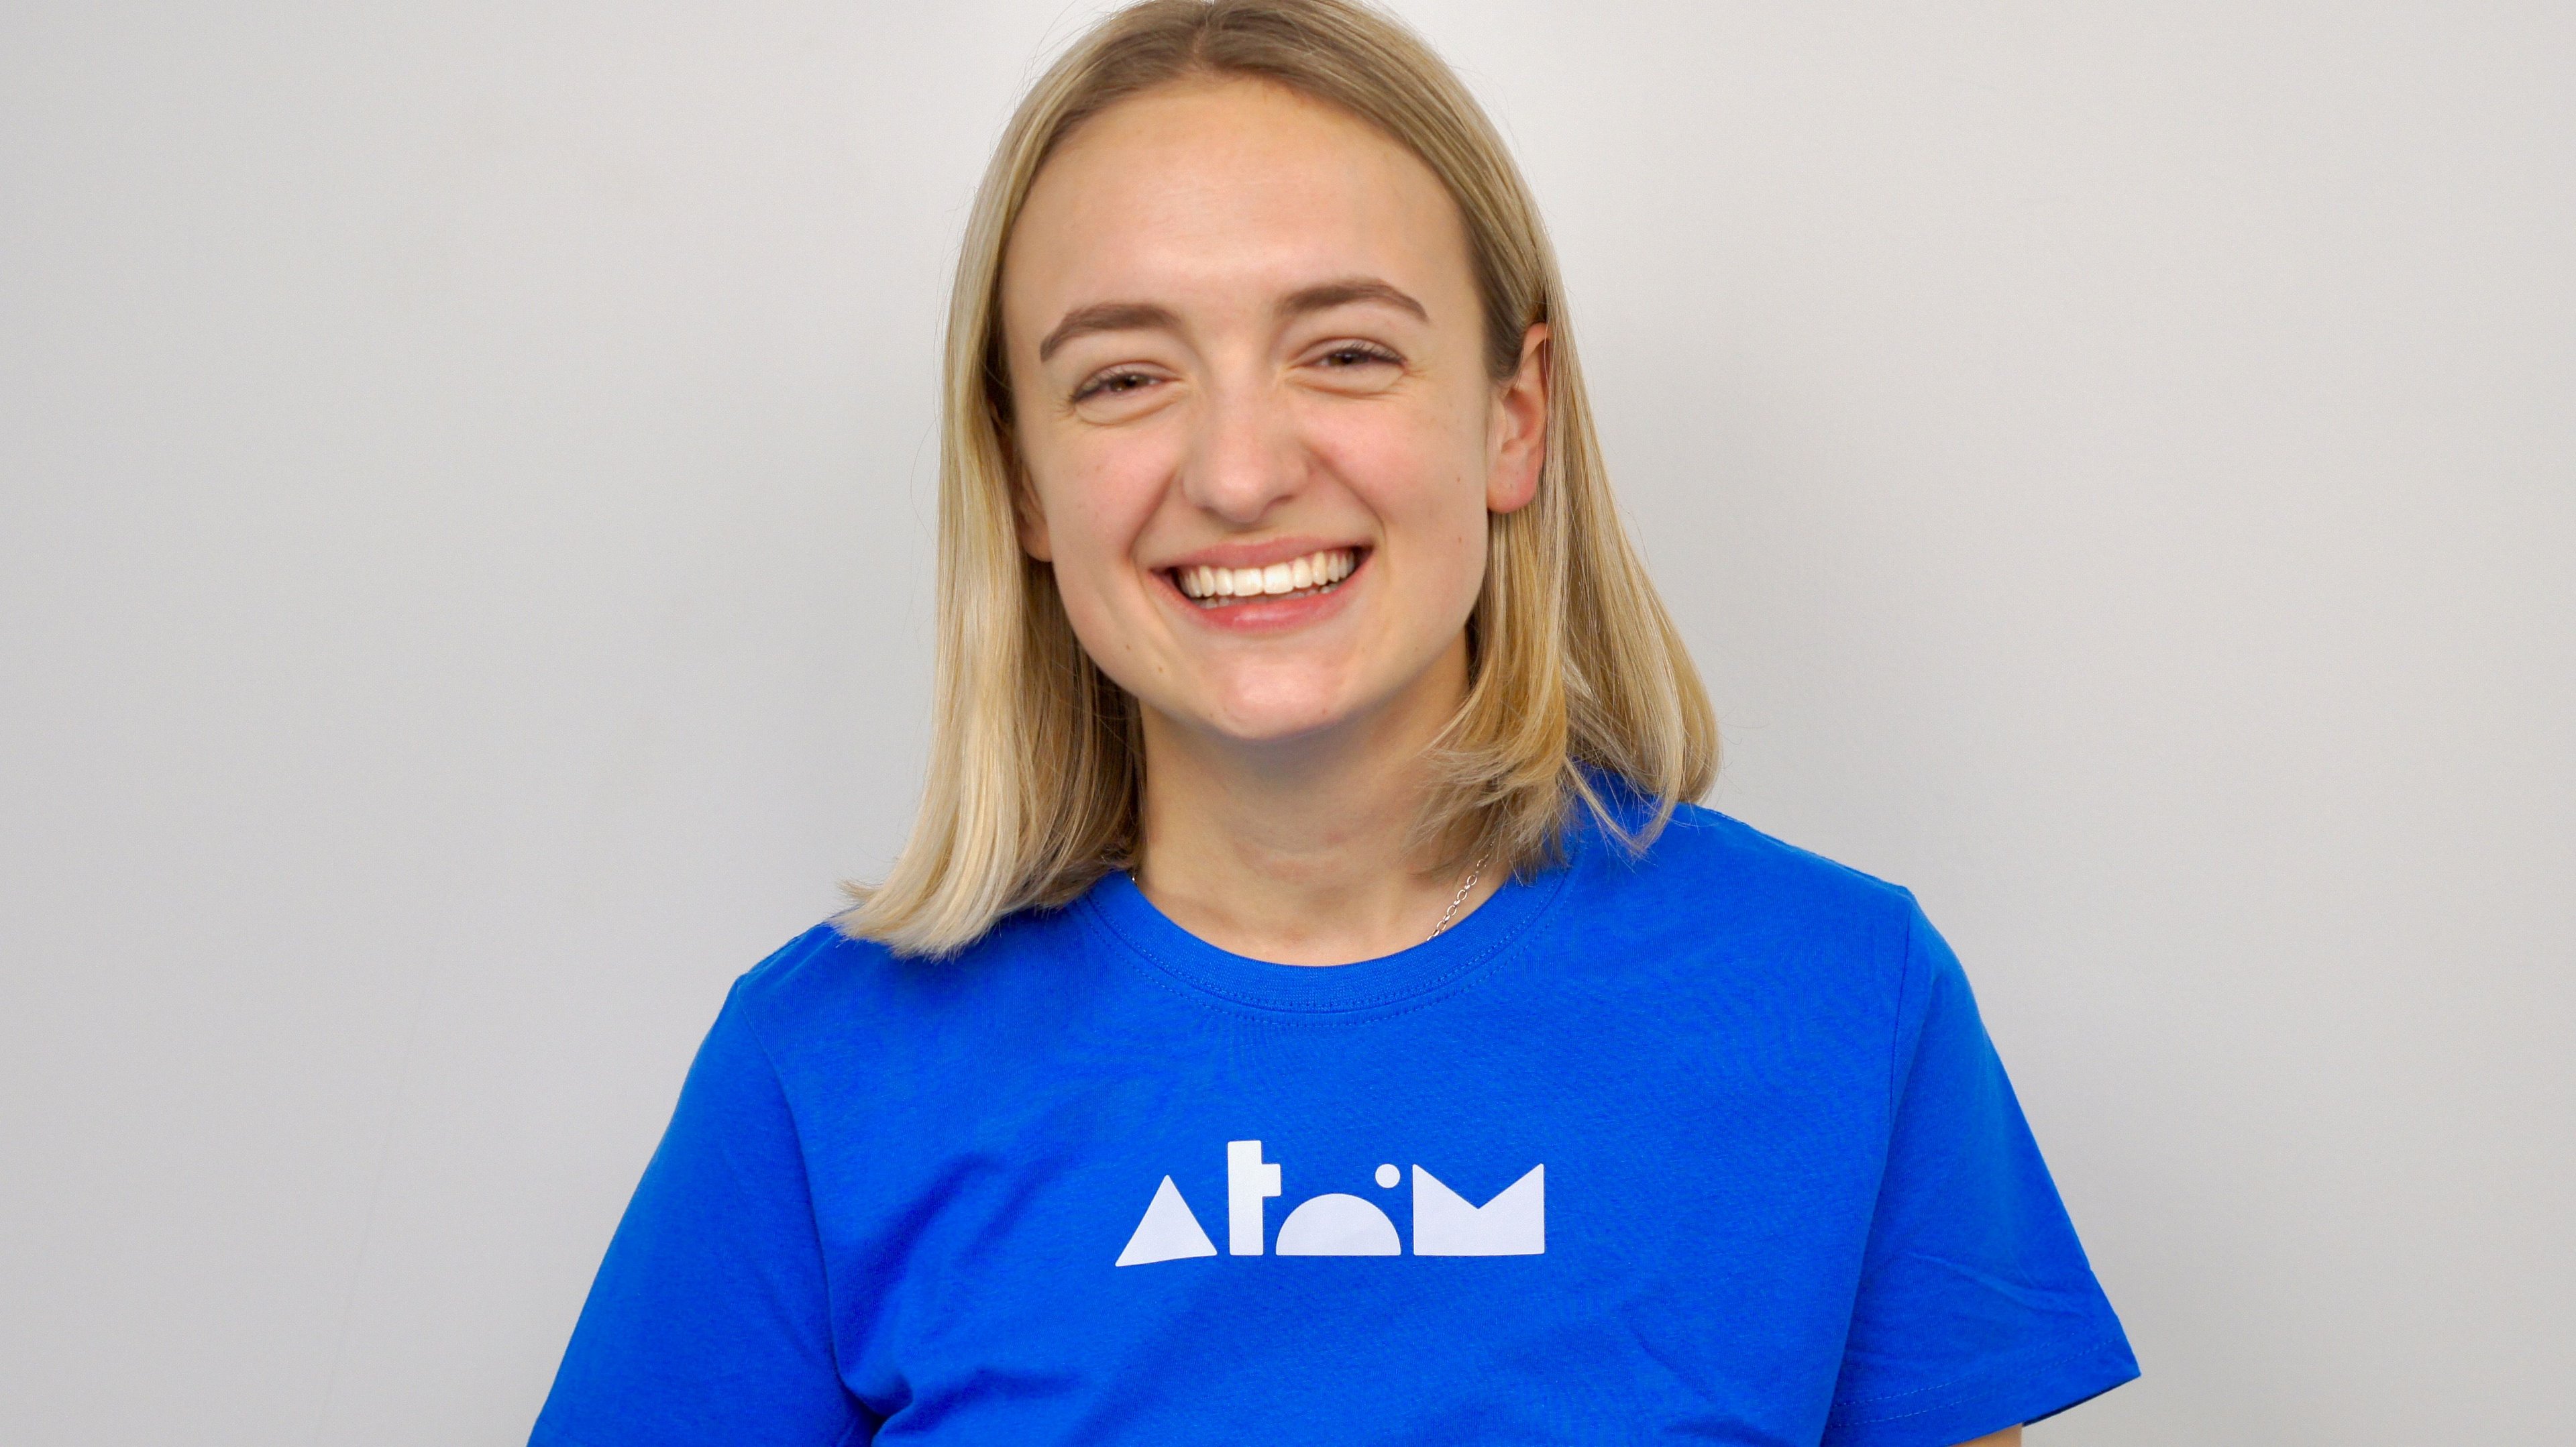 Smiling blonde woman in Atom t-shirt